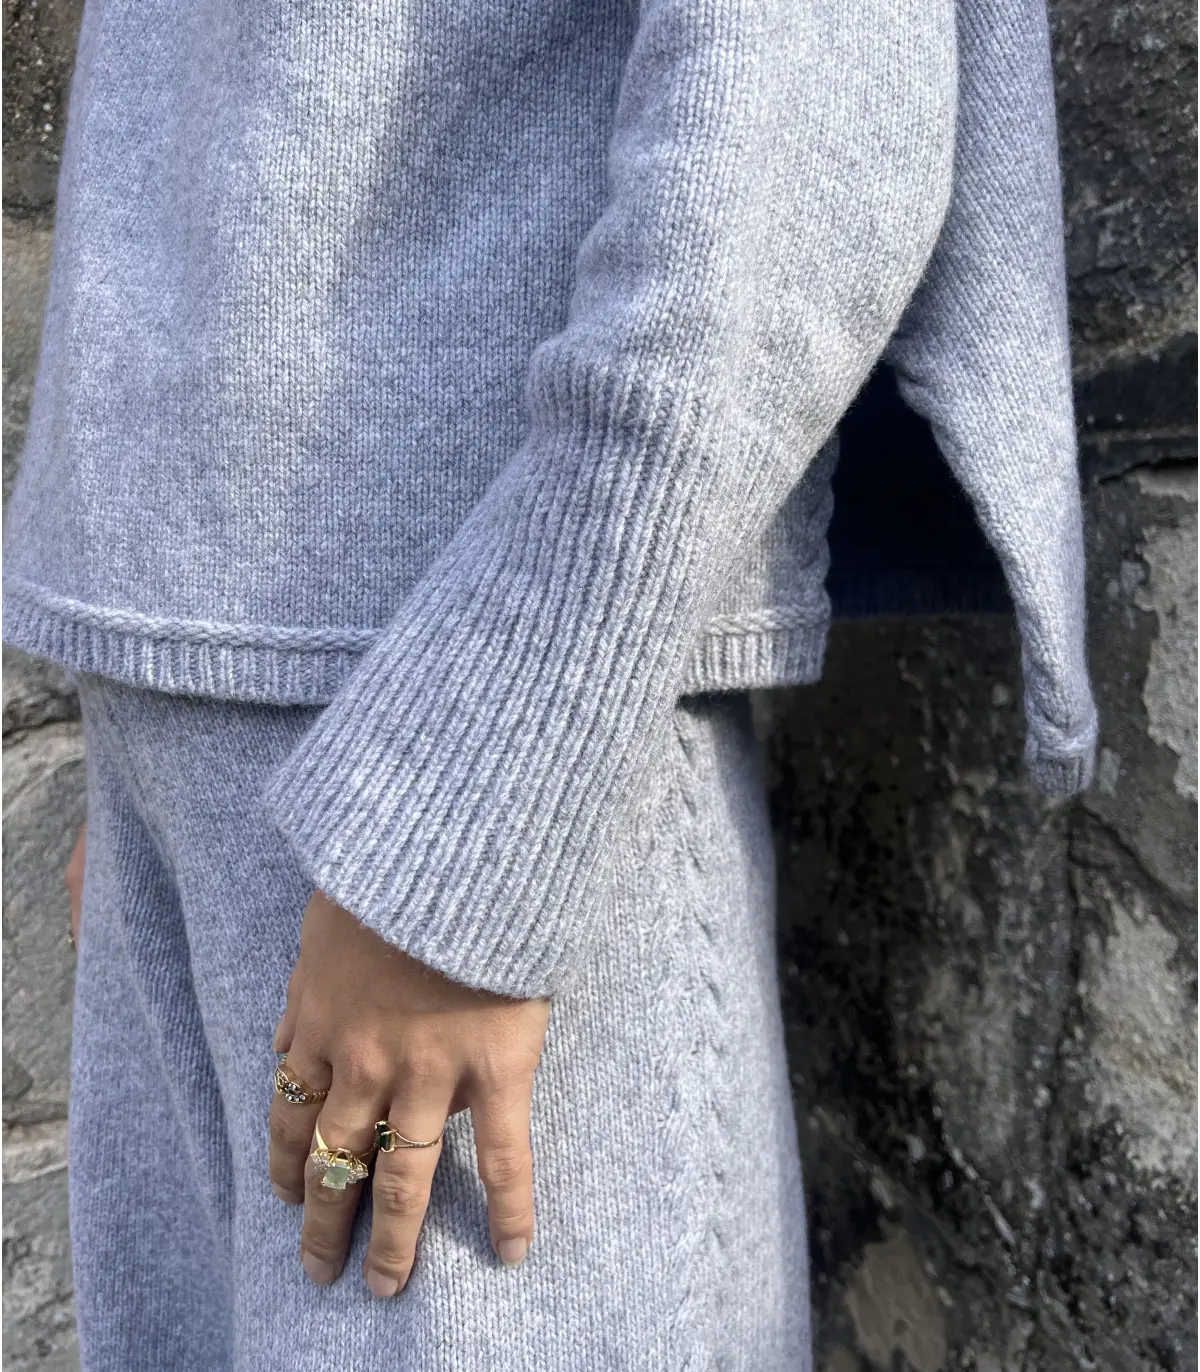 Pull long en laine d'alpaga pour femme / Pull chaud pour femmes / Pull en  tricot chaud pour l'hiver -  France